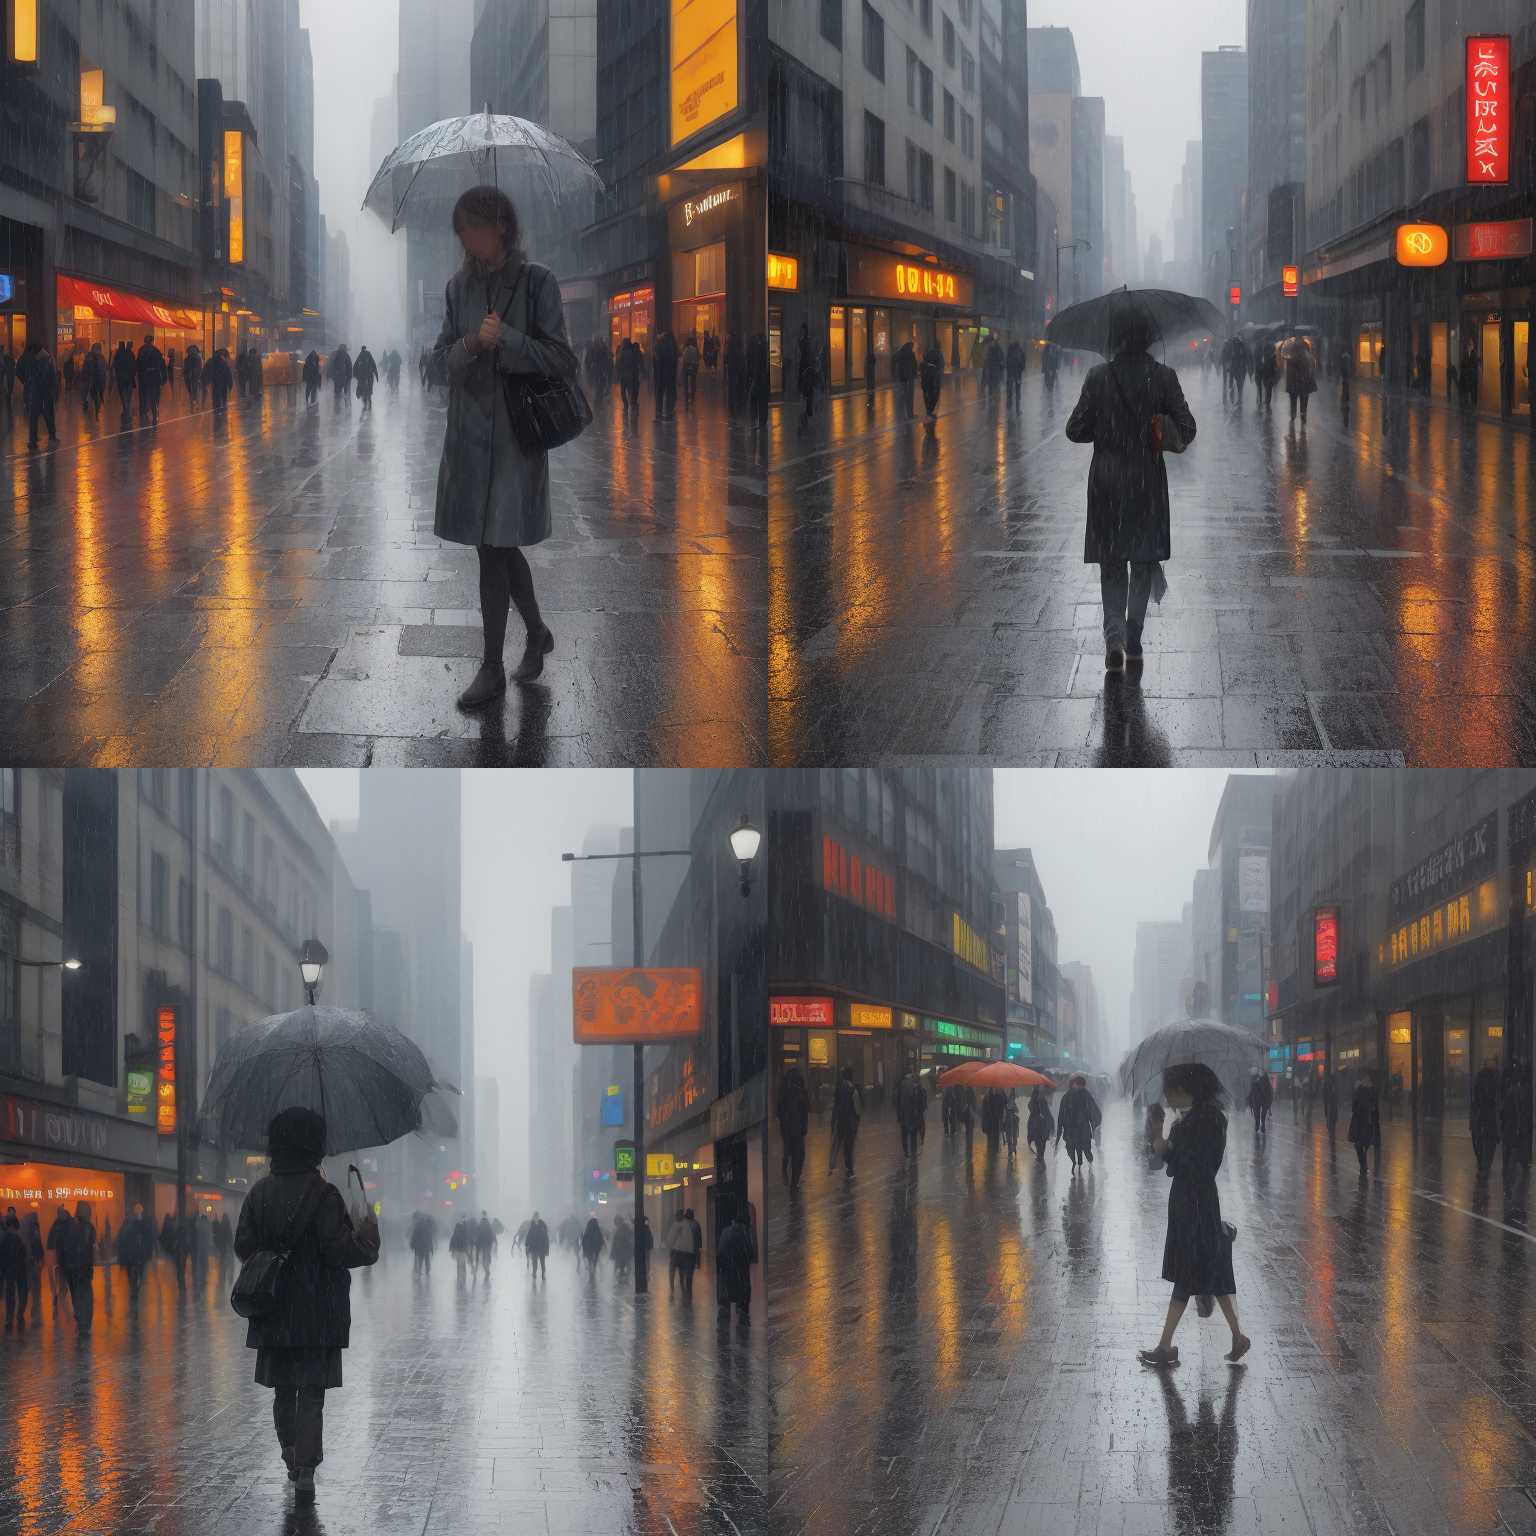 A pedestrian on a rainy day